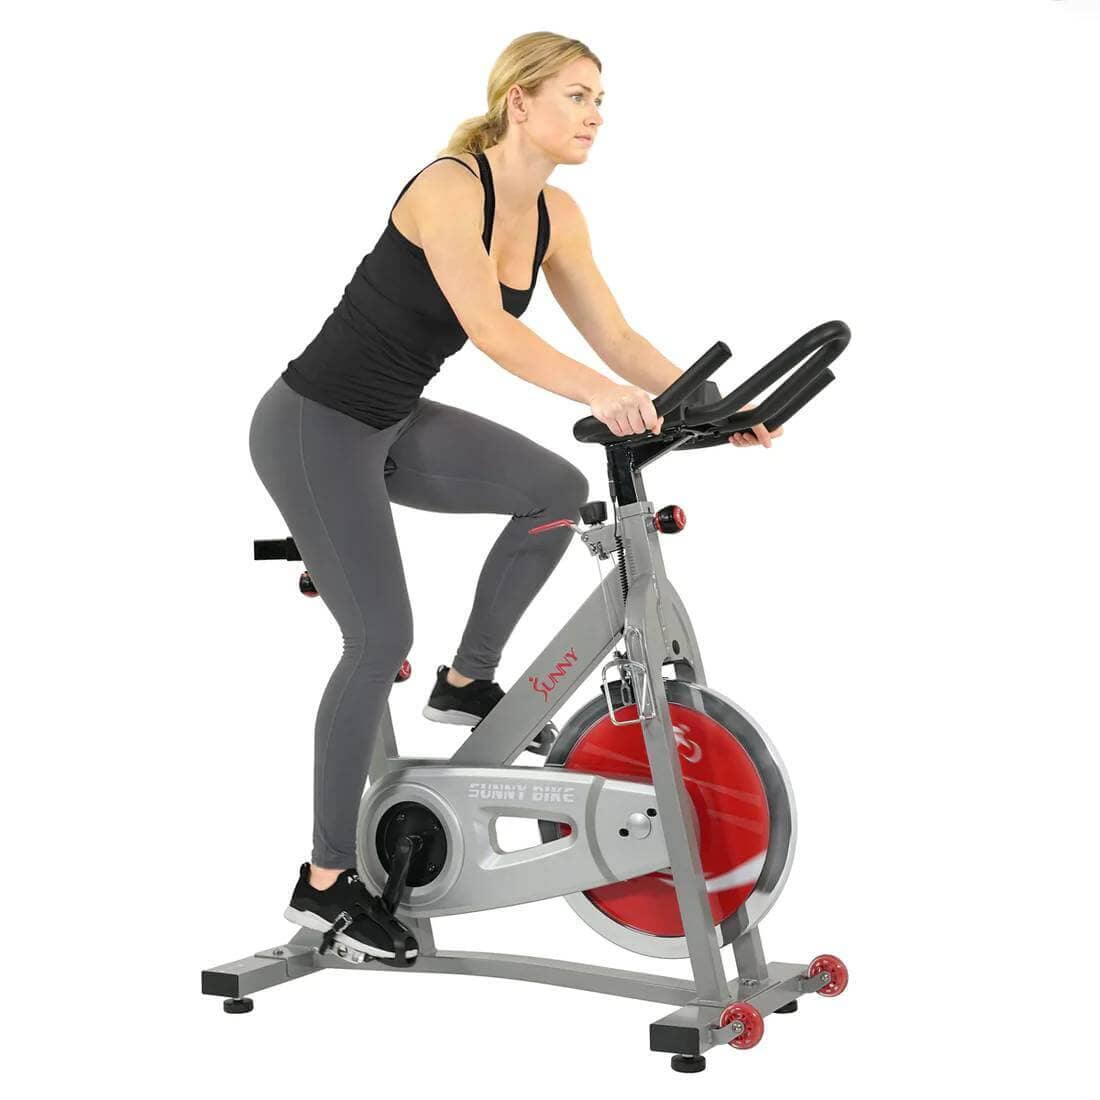 Sunny Health Fitness Pro II Indoor Cycling Bike - Silent Belt Drive-Adjustable Seat-Black-49.5x20x49 in